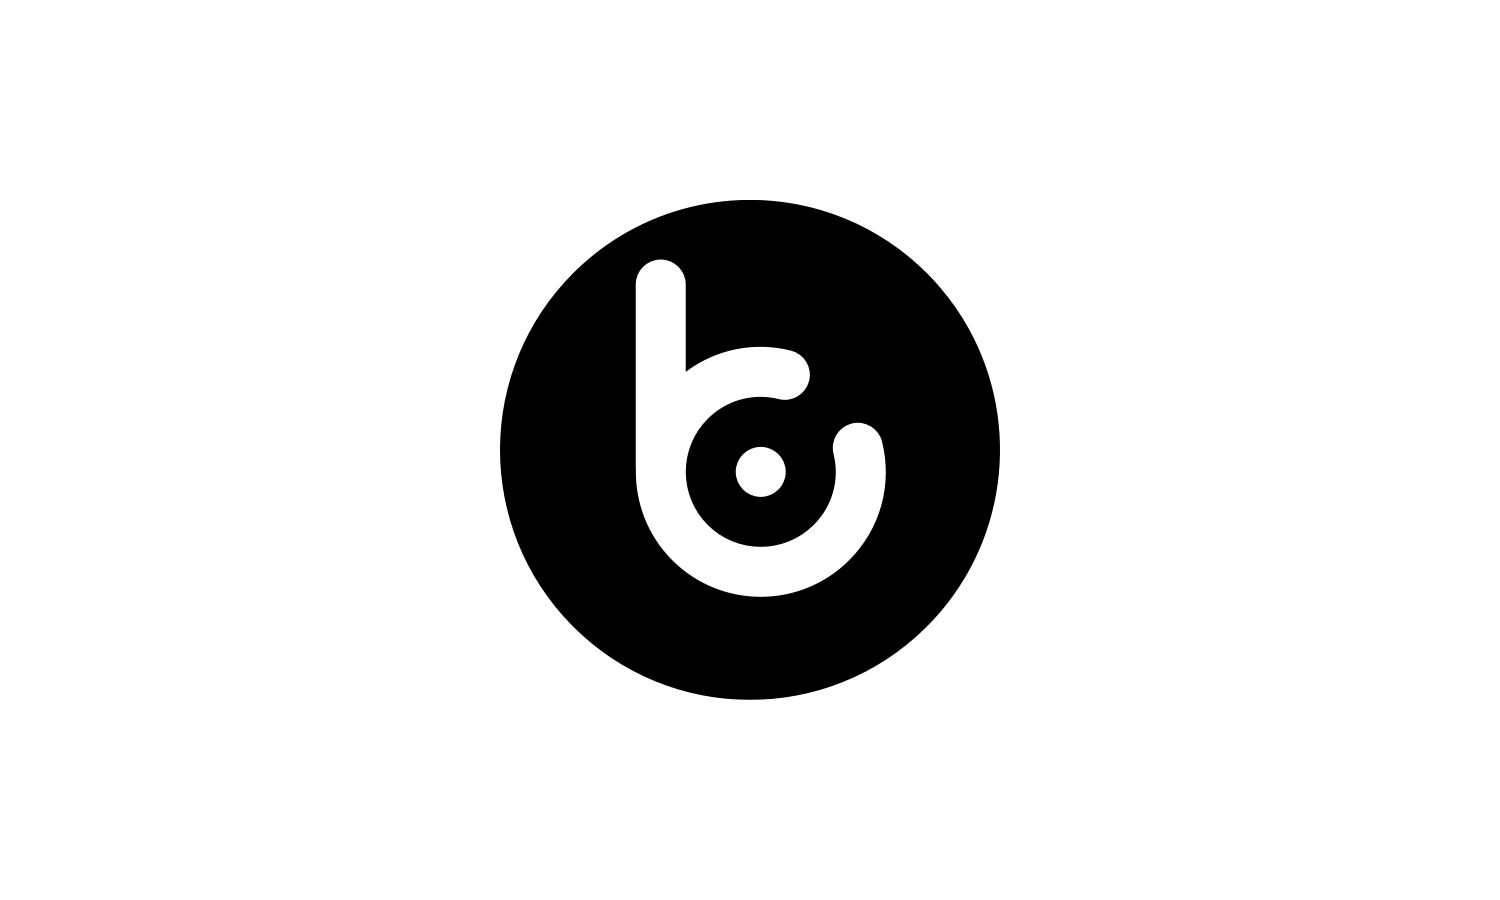 brate logo symbol dark